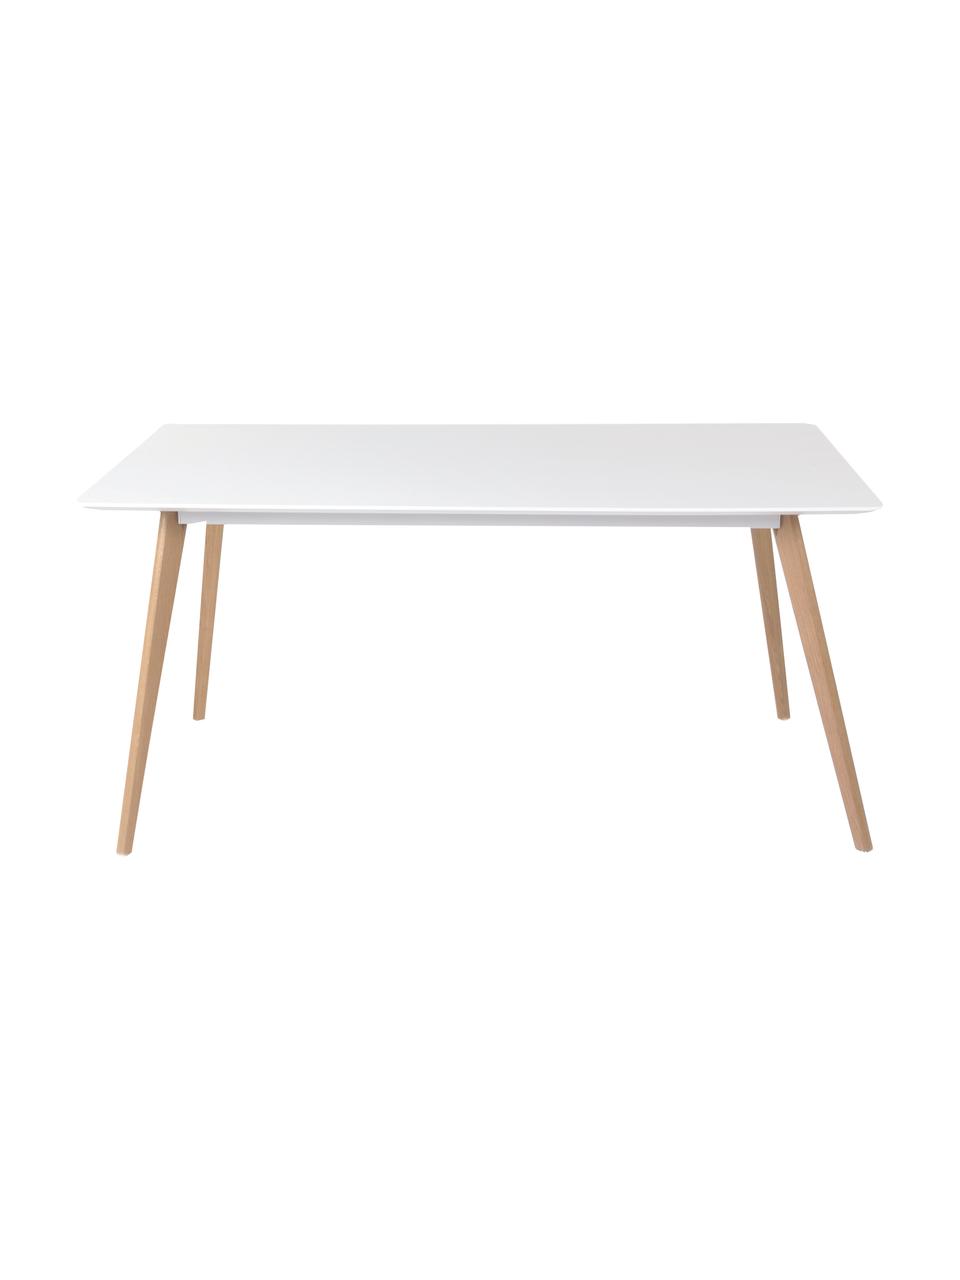 Jídelní stůl Flamy, 160 x 90 cm, Bílá, dub